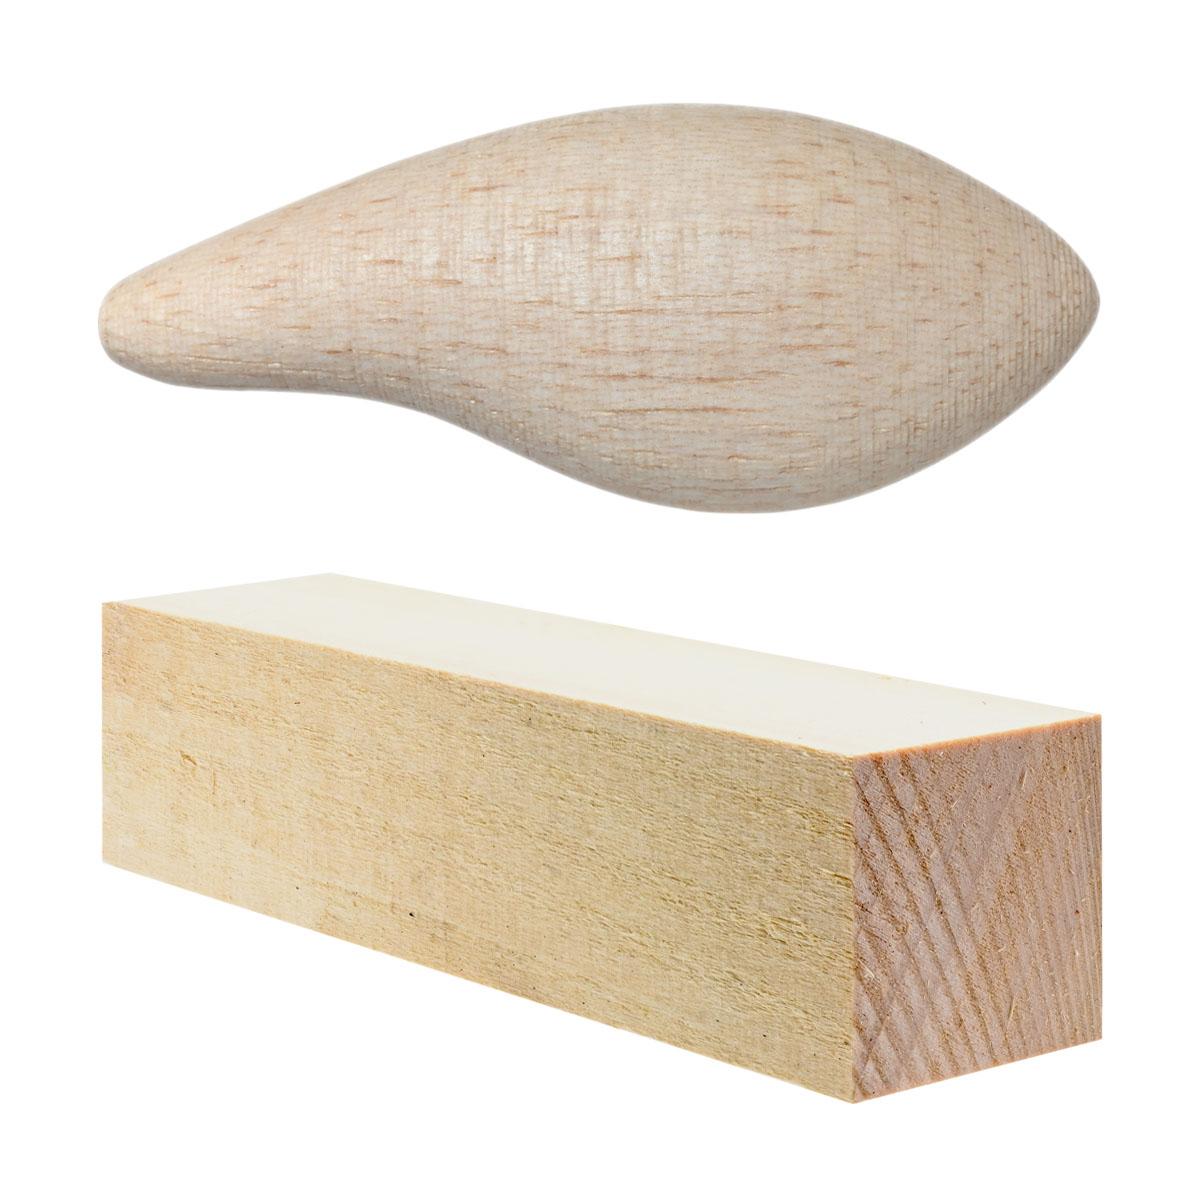 Wood Bodies, Blocks